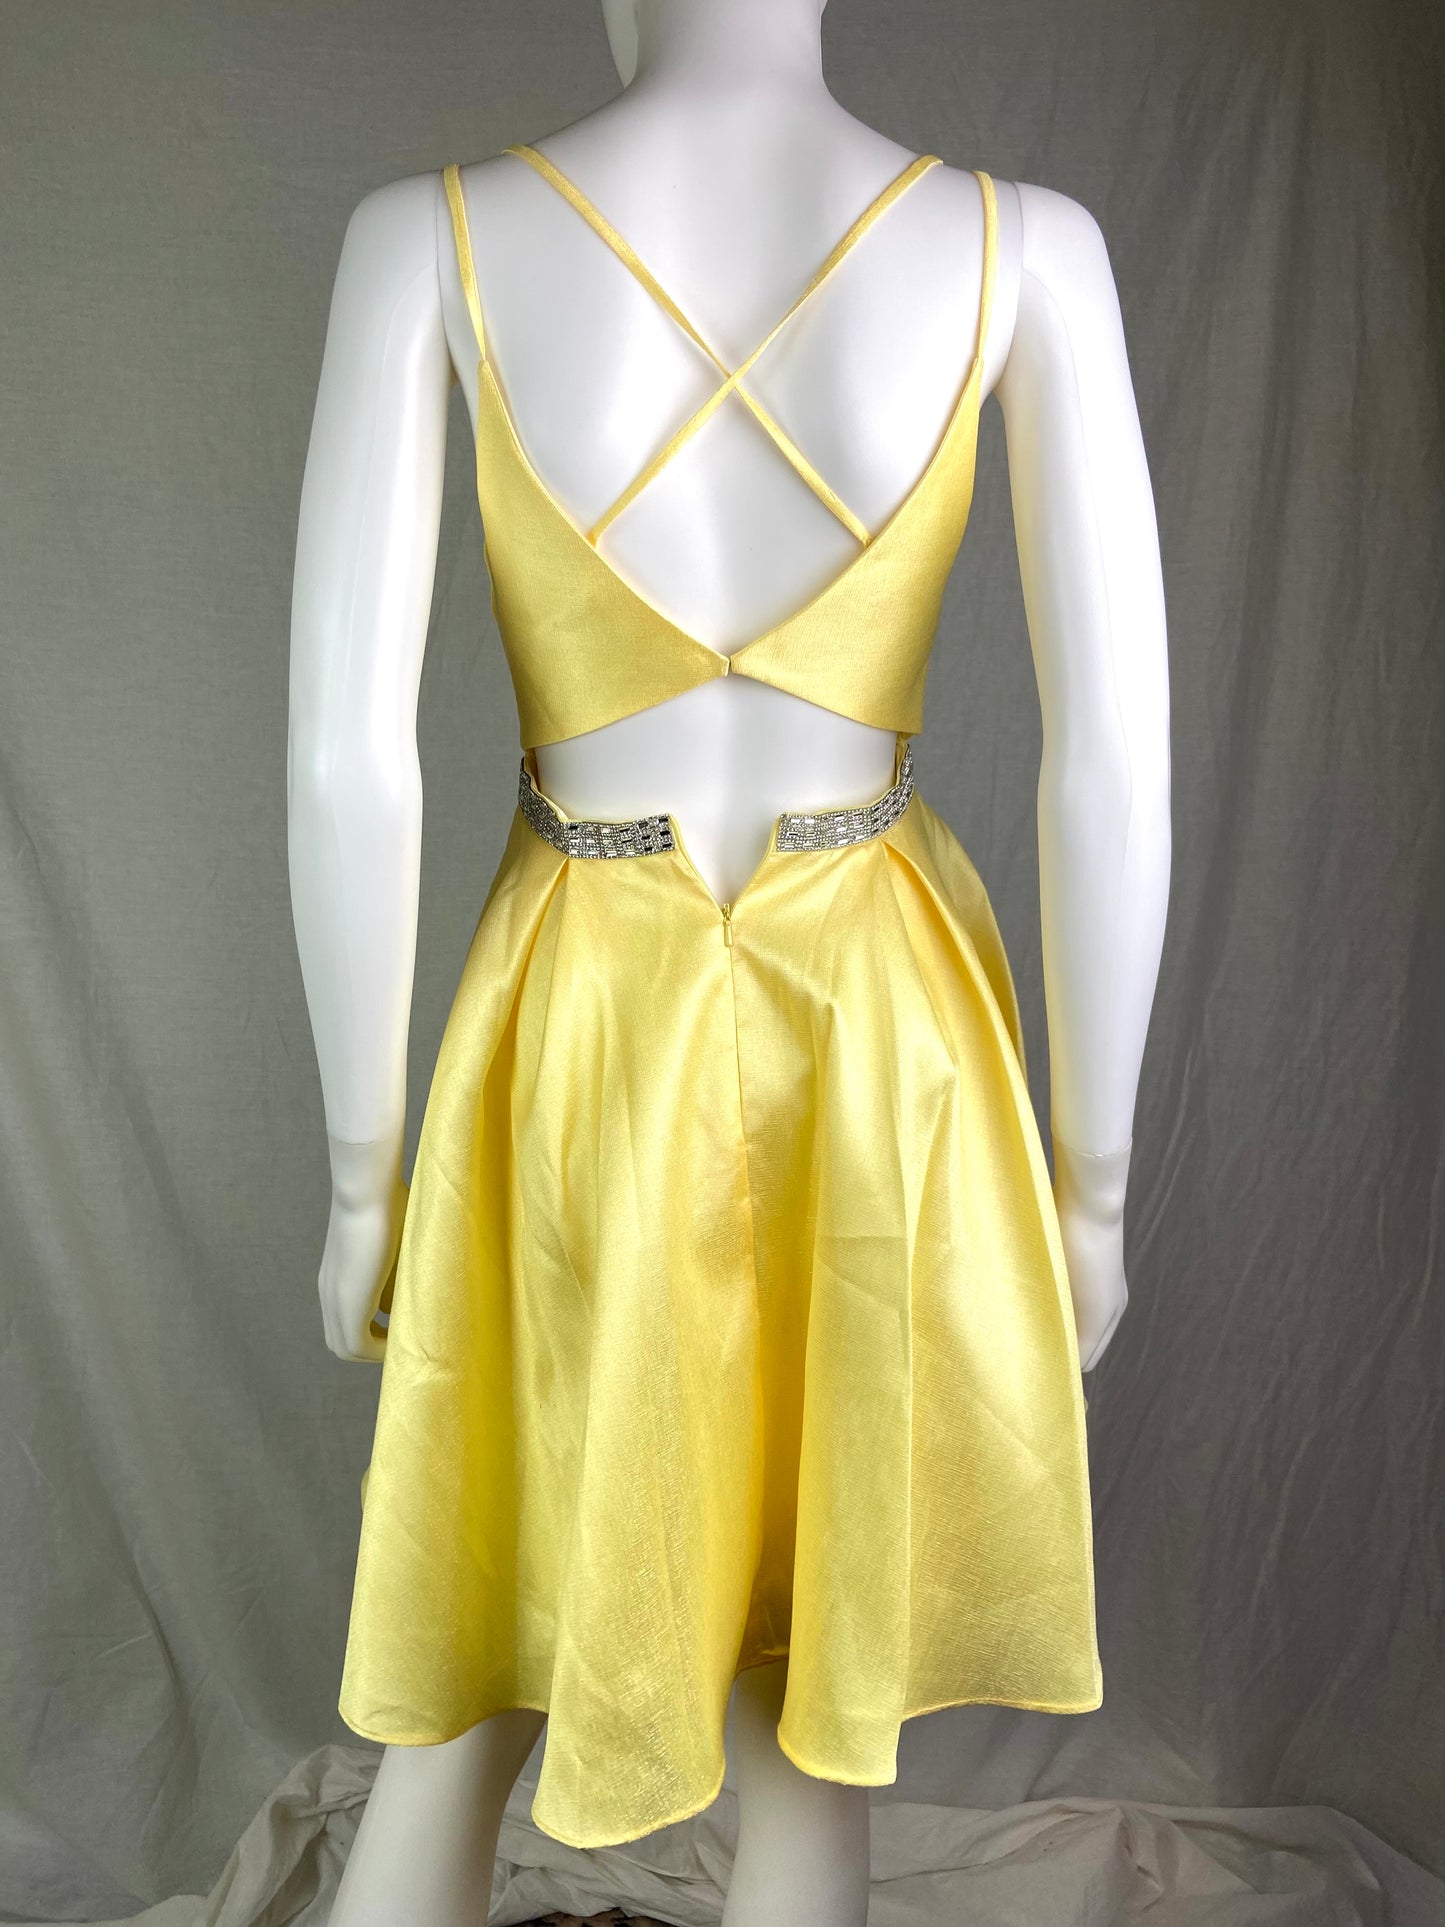 Vtg Promgirl Yellow Glitter Rhinestone Cocktail Dress